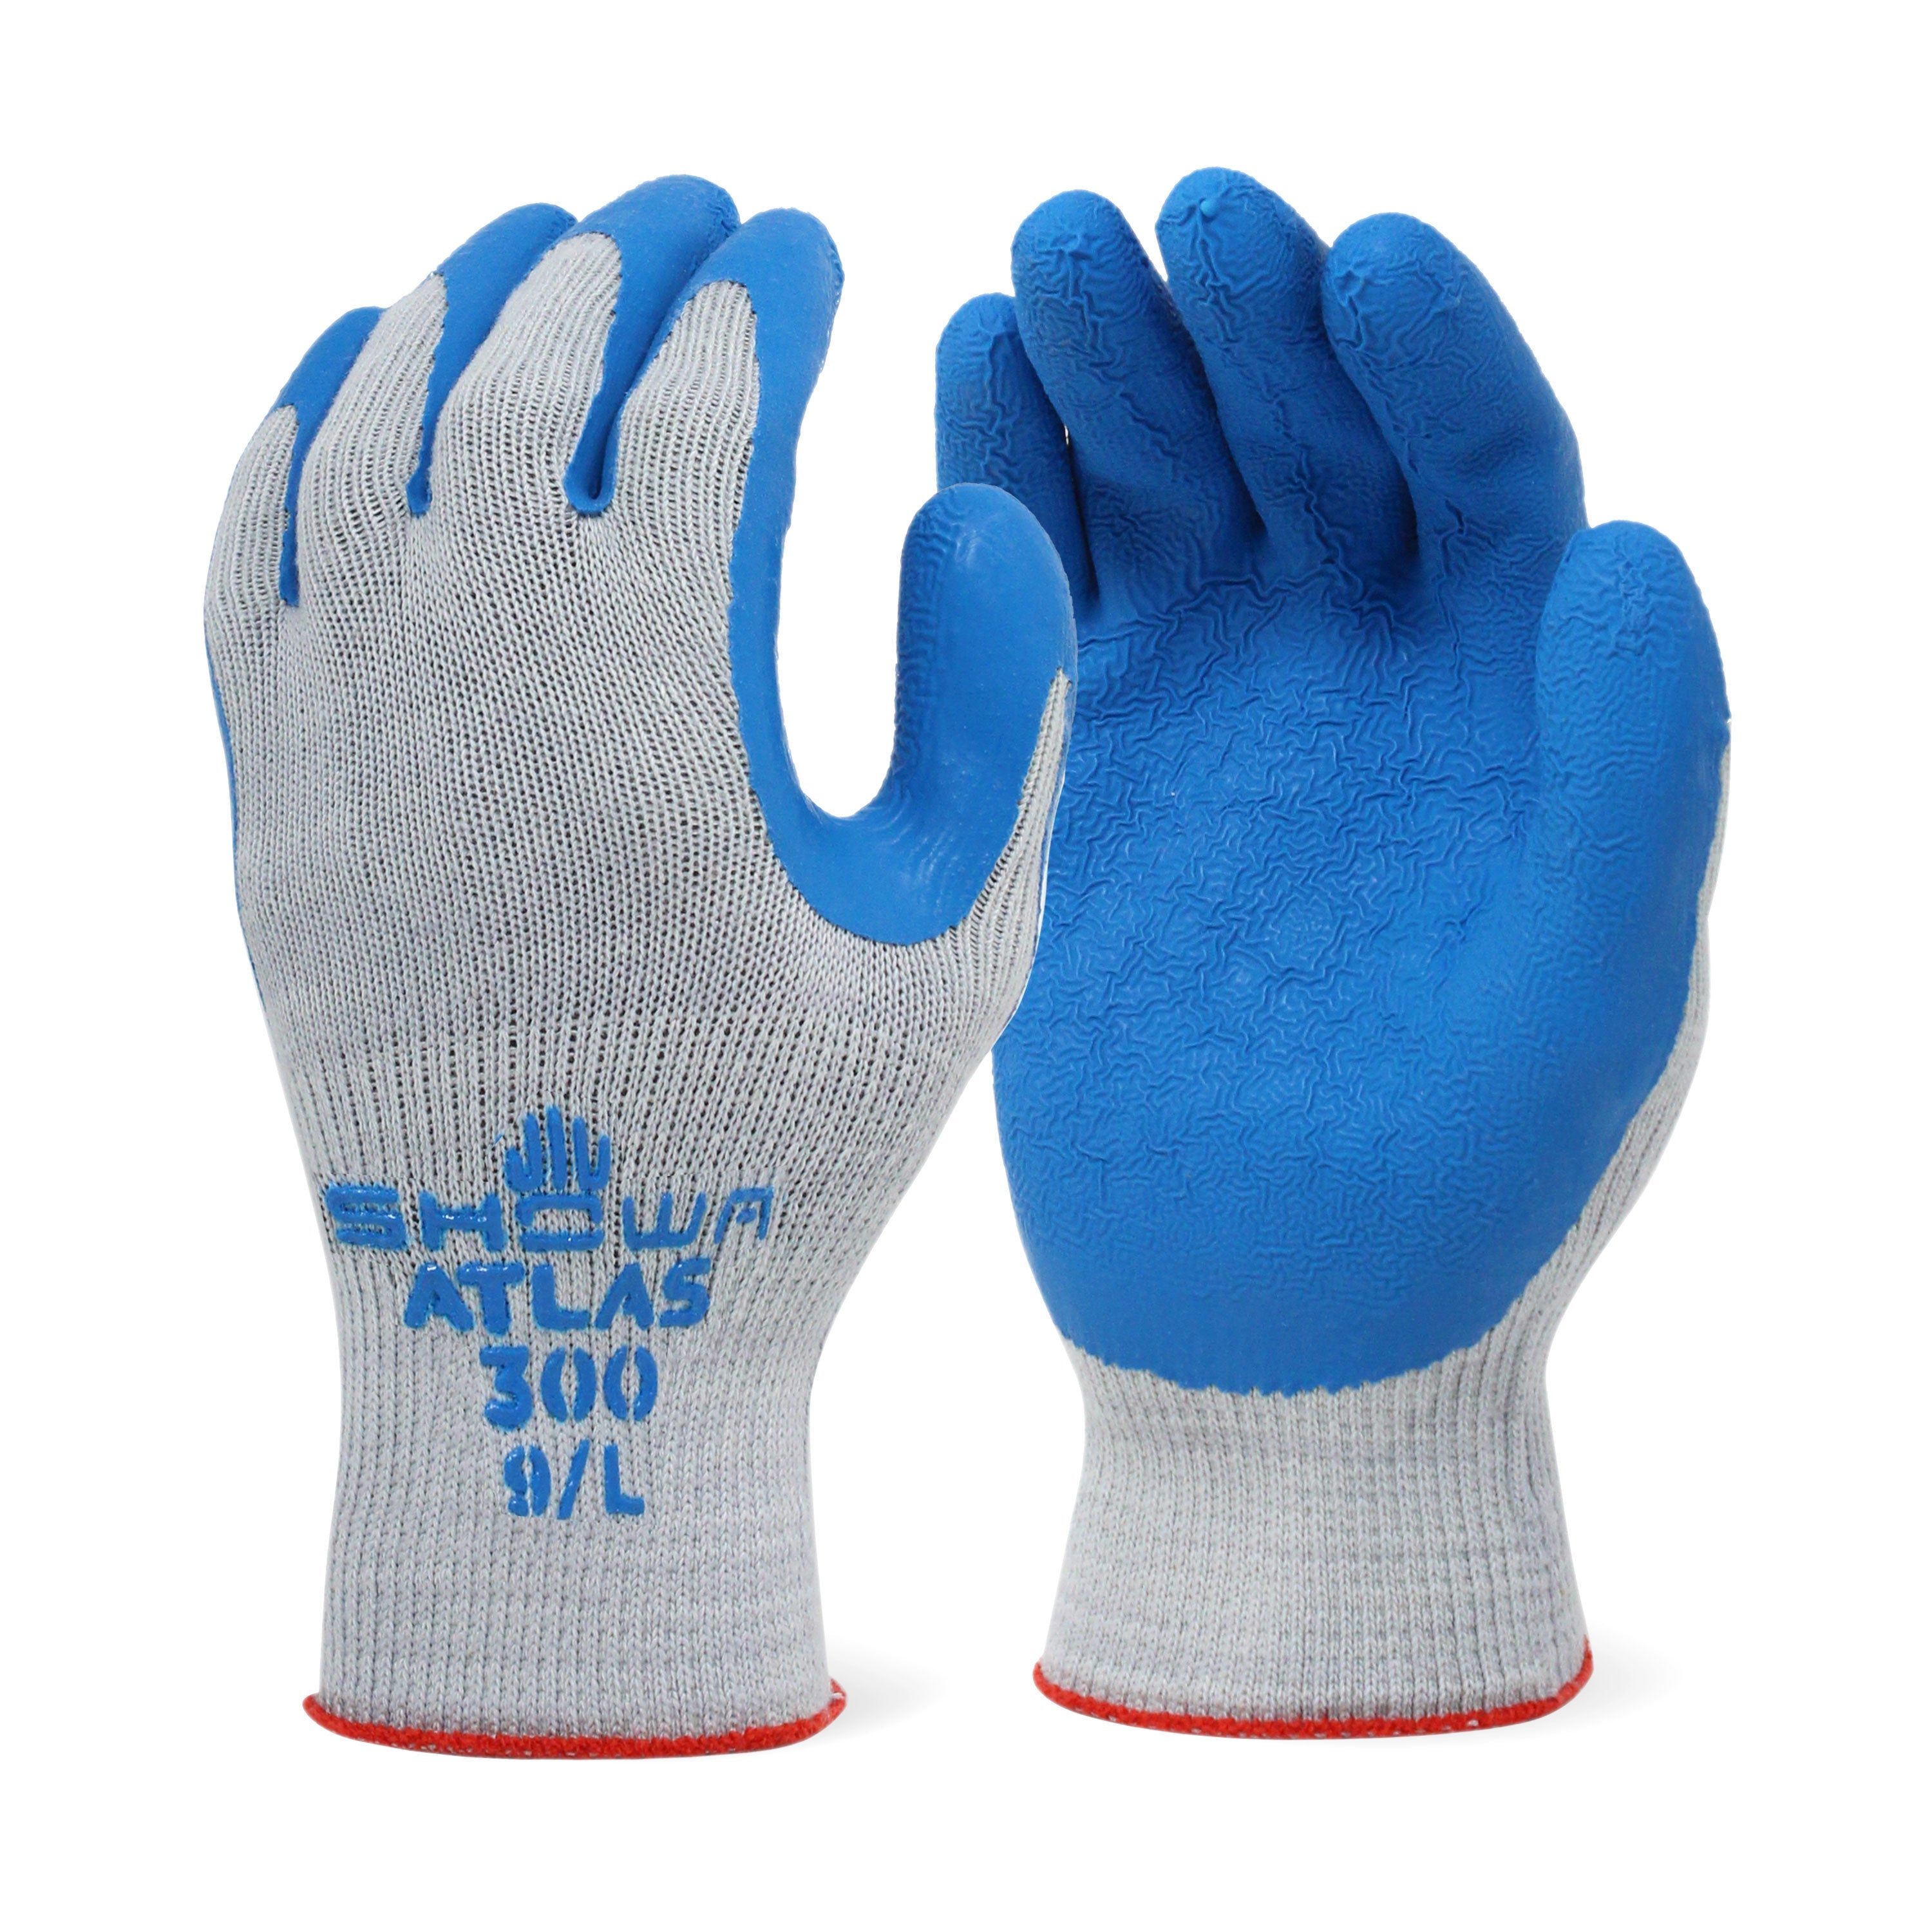 Wholesale Sublimated Stroke Printed Gloves Manufacturer in USA, Australia,  Canada, Europe & UAE